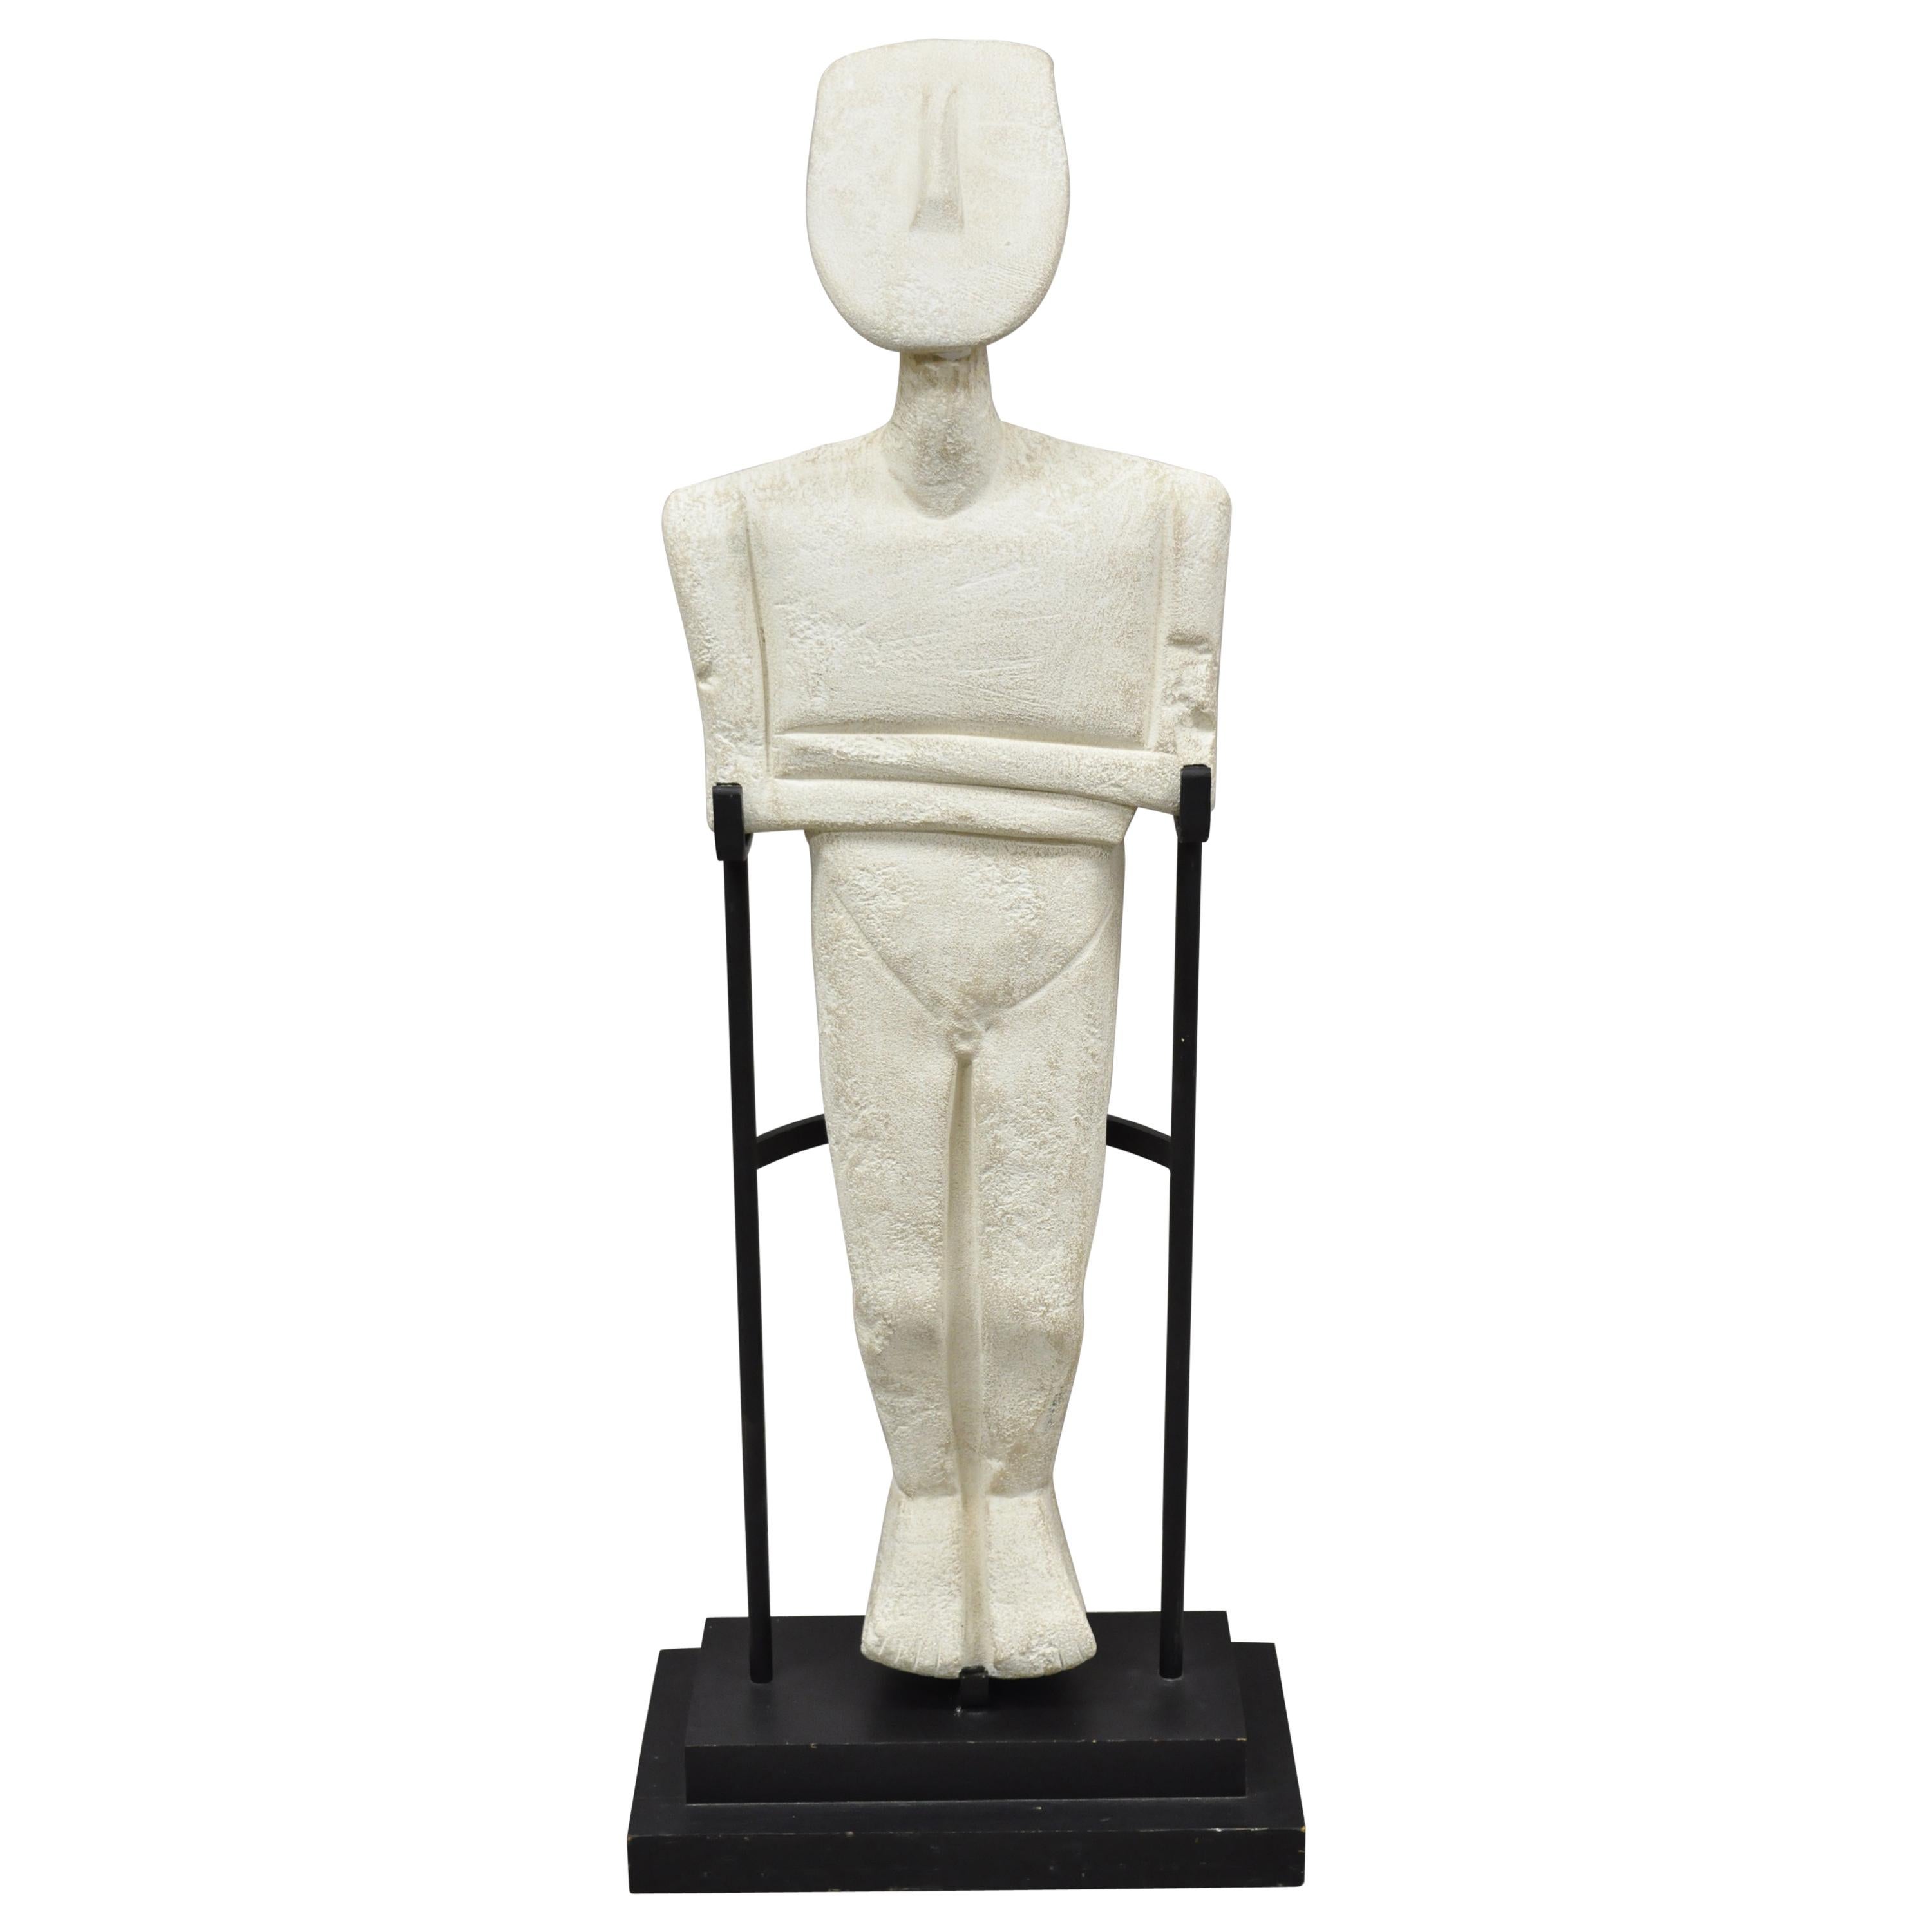 Greek Cycladic Idol 47" Tall Plaster Figure on Stand Statue Figurine Sculpture For Sale